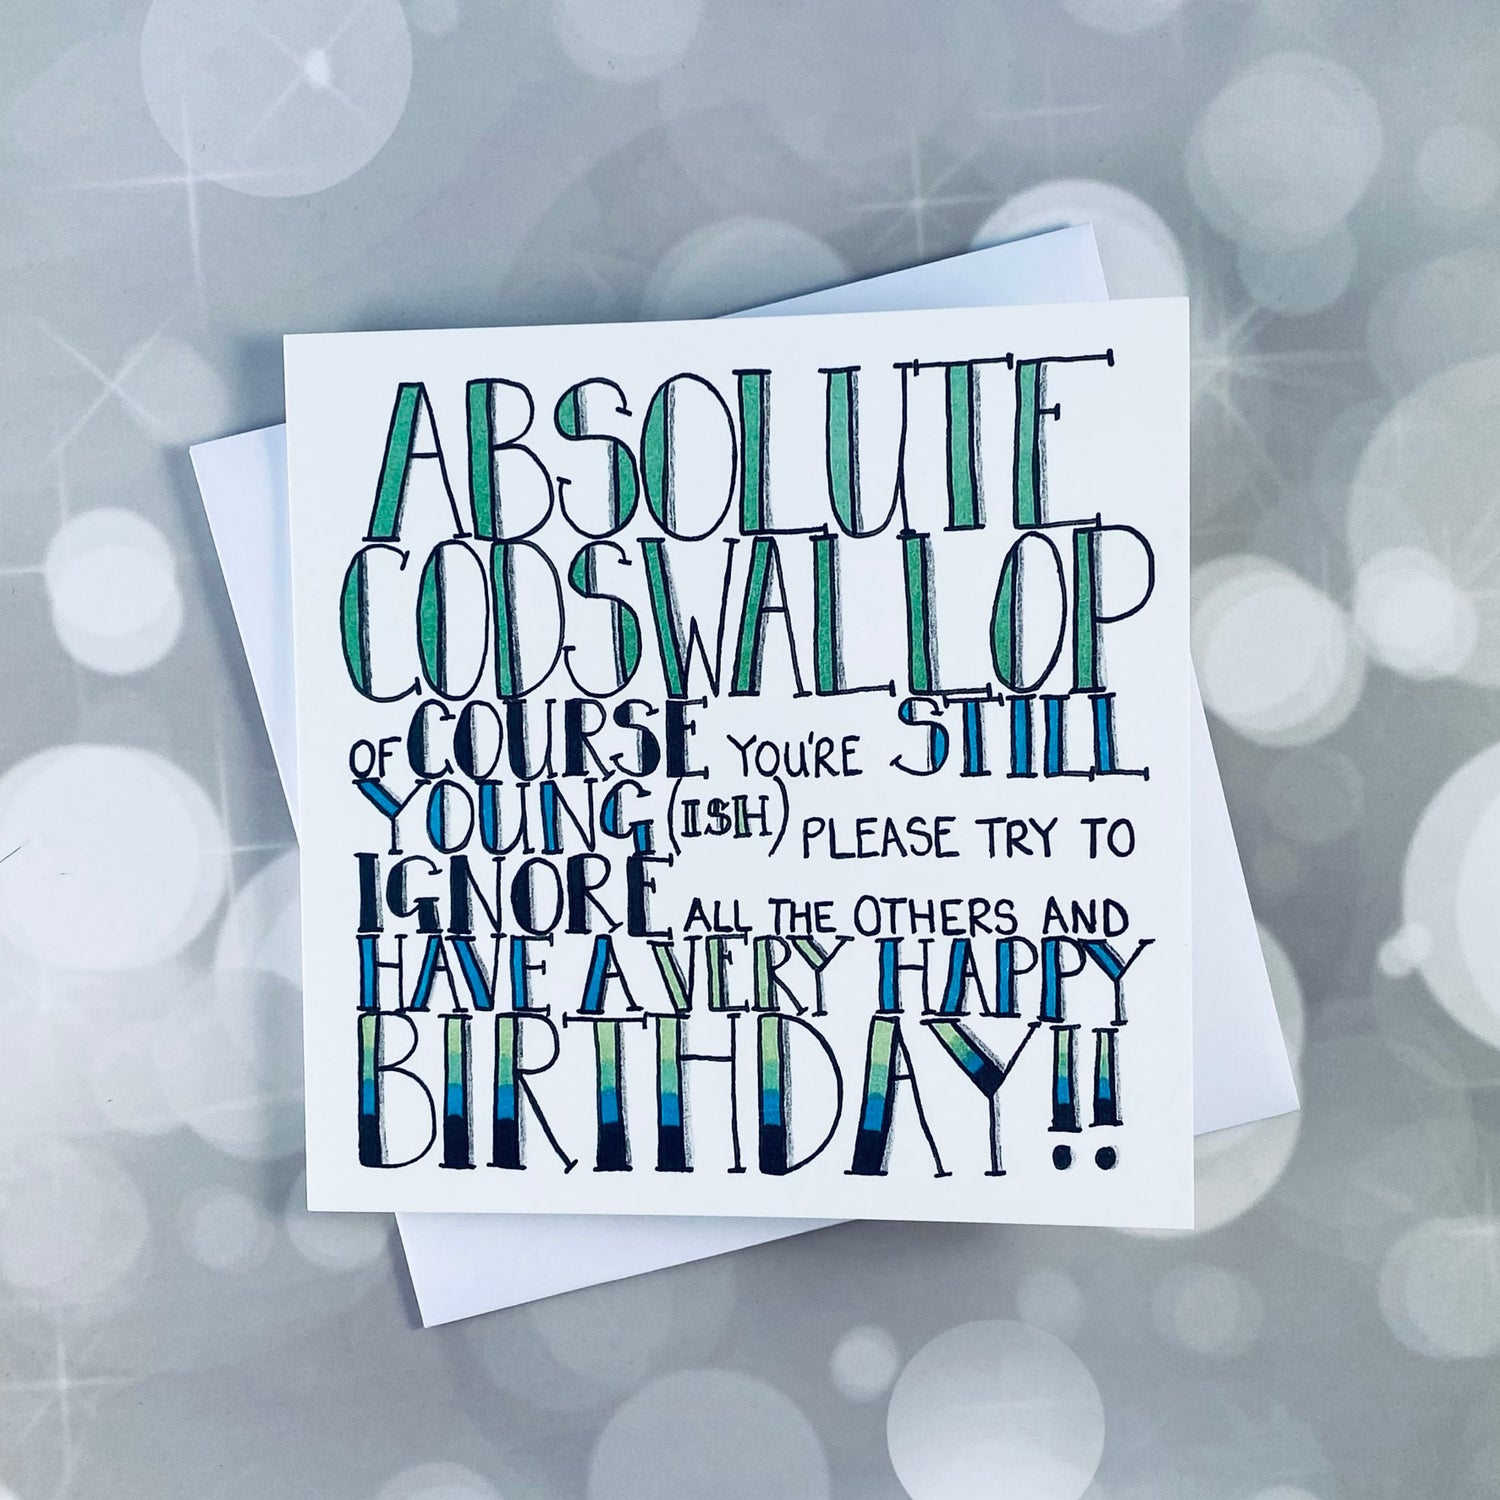 creative-birthday-cards